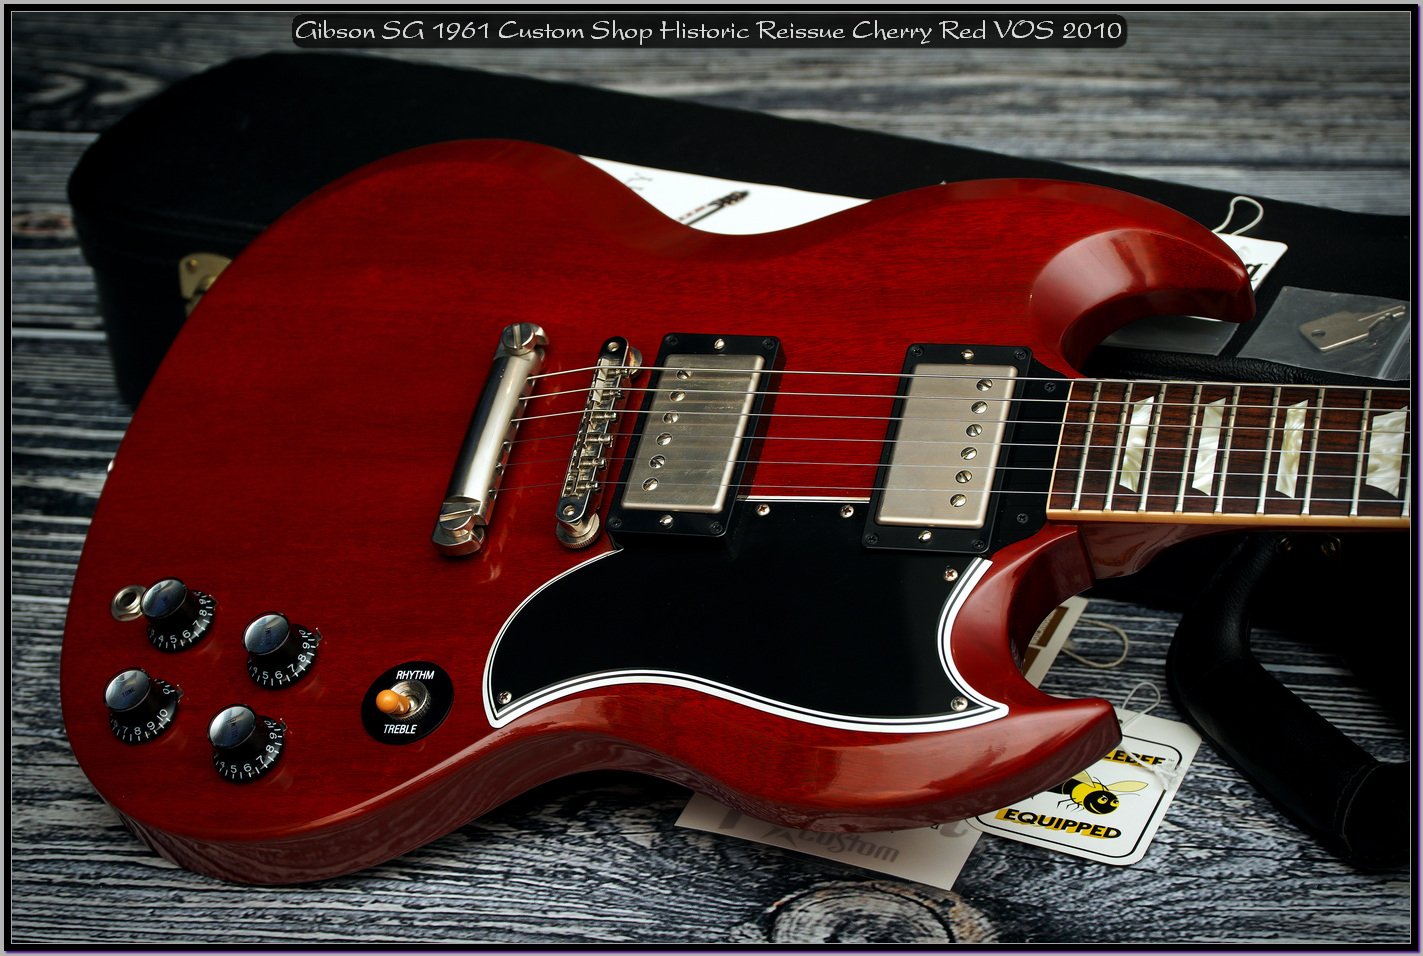 Gibson SG 1961 Custom Shop Historic Reissue Cherry Red VOS 2010 07_x1400.jpg